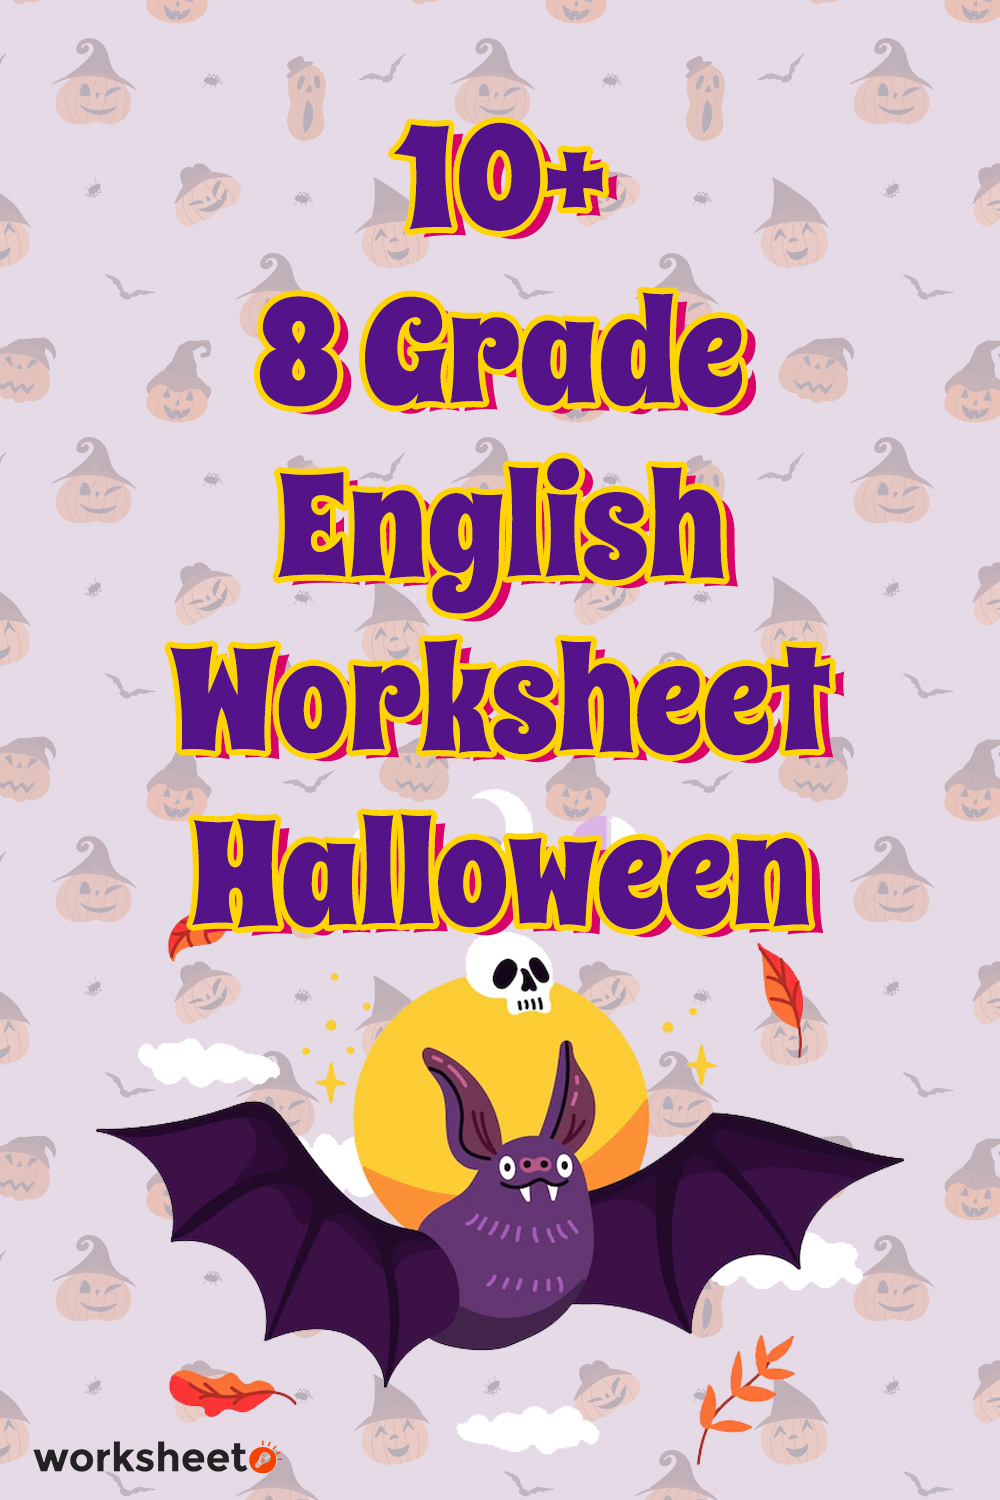 8 Grade English Worksheet Halloween